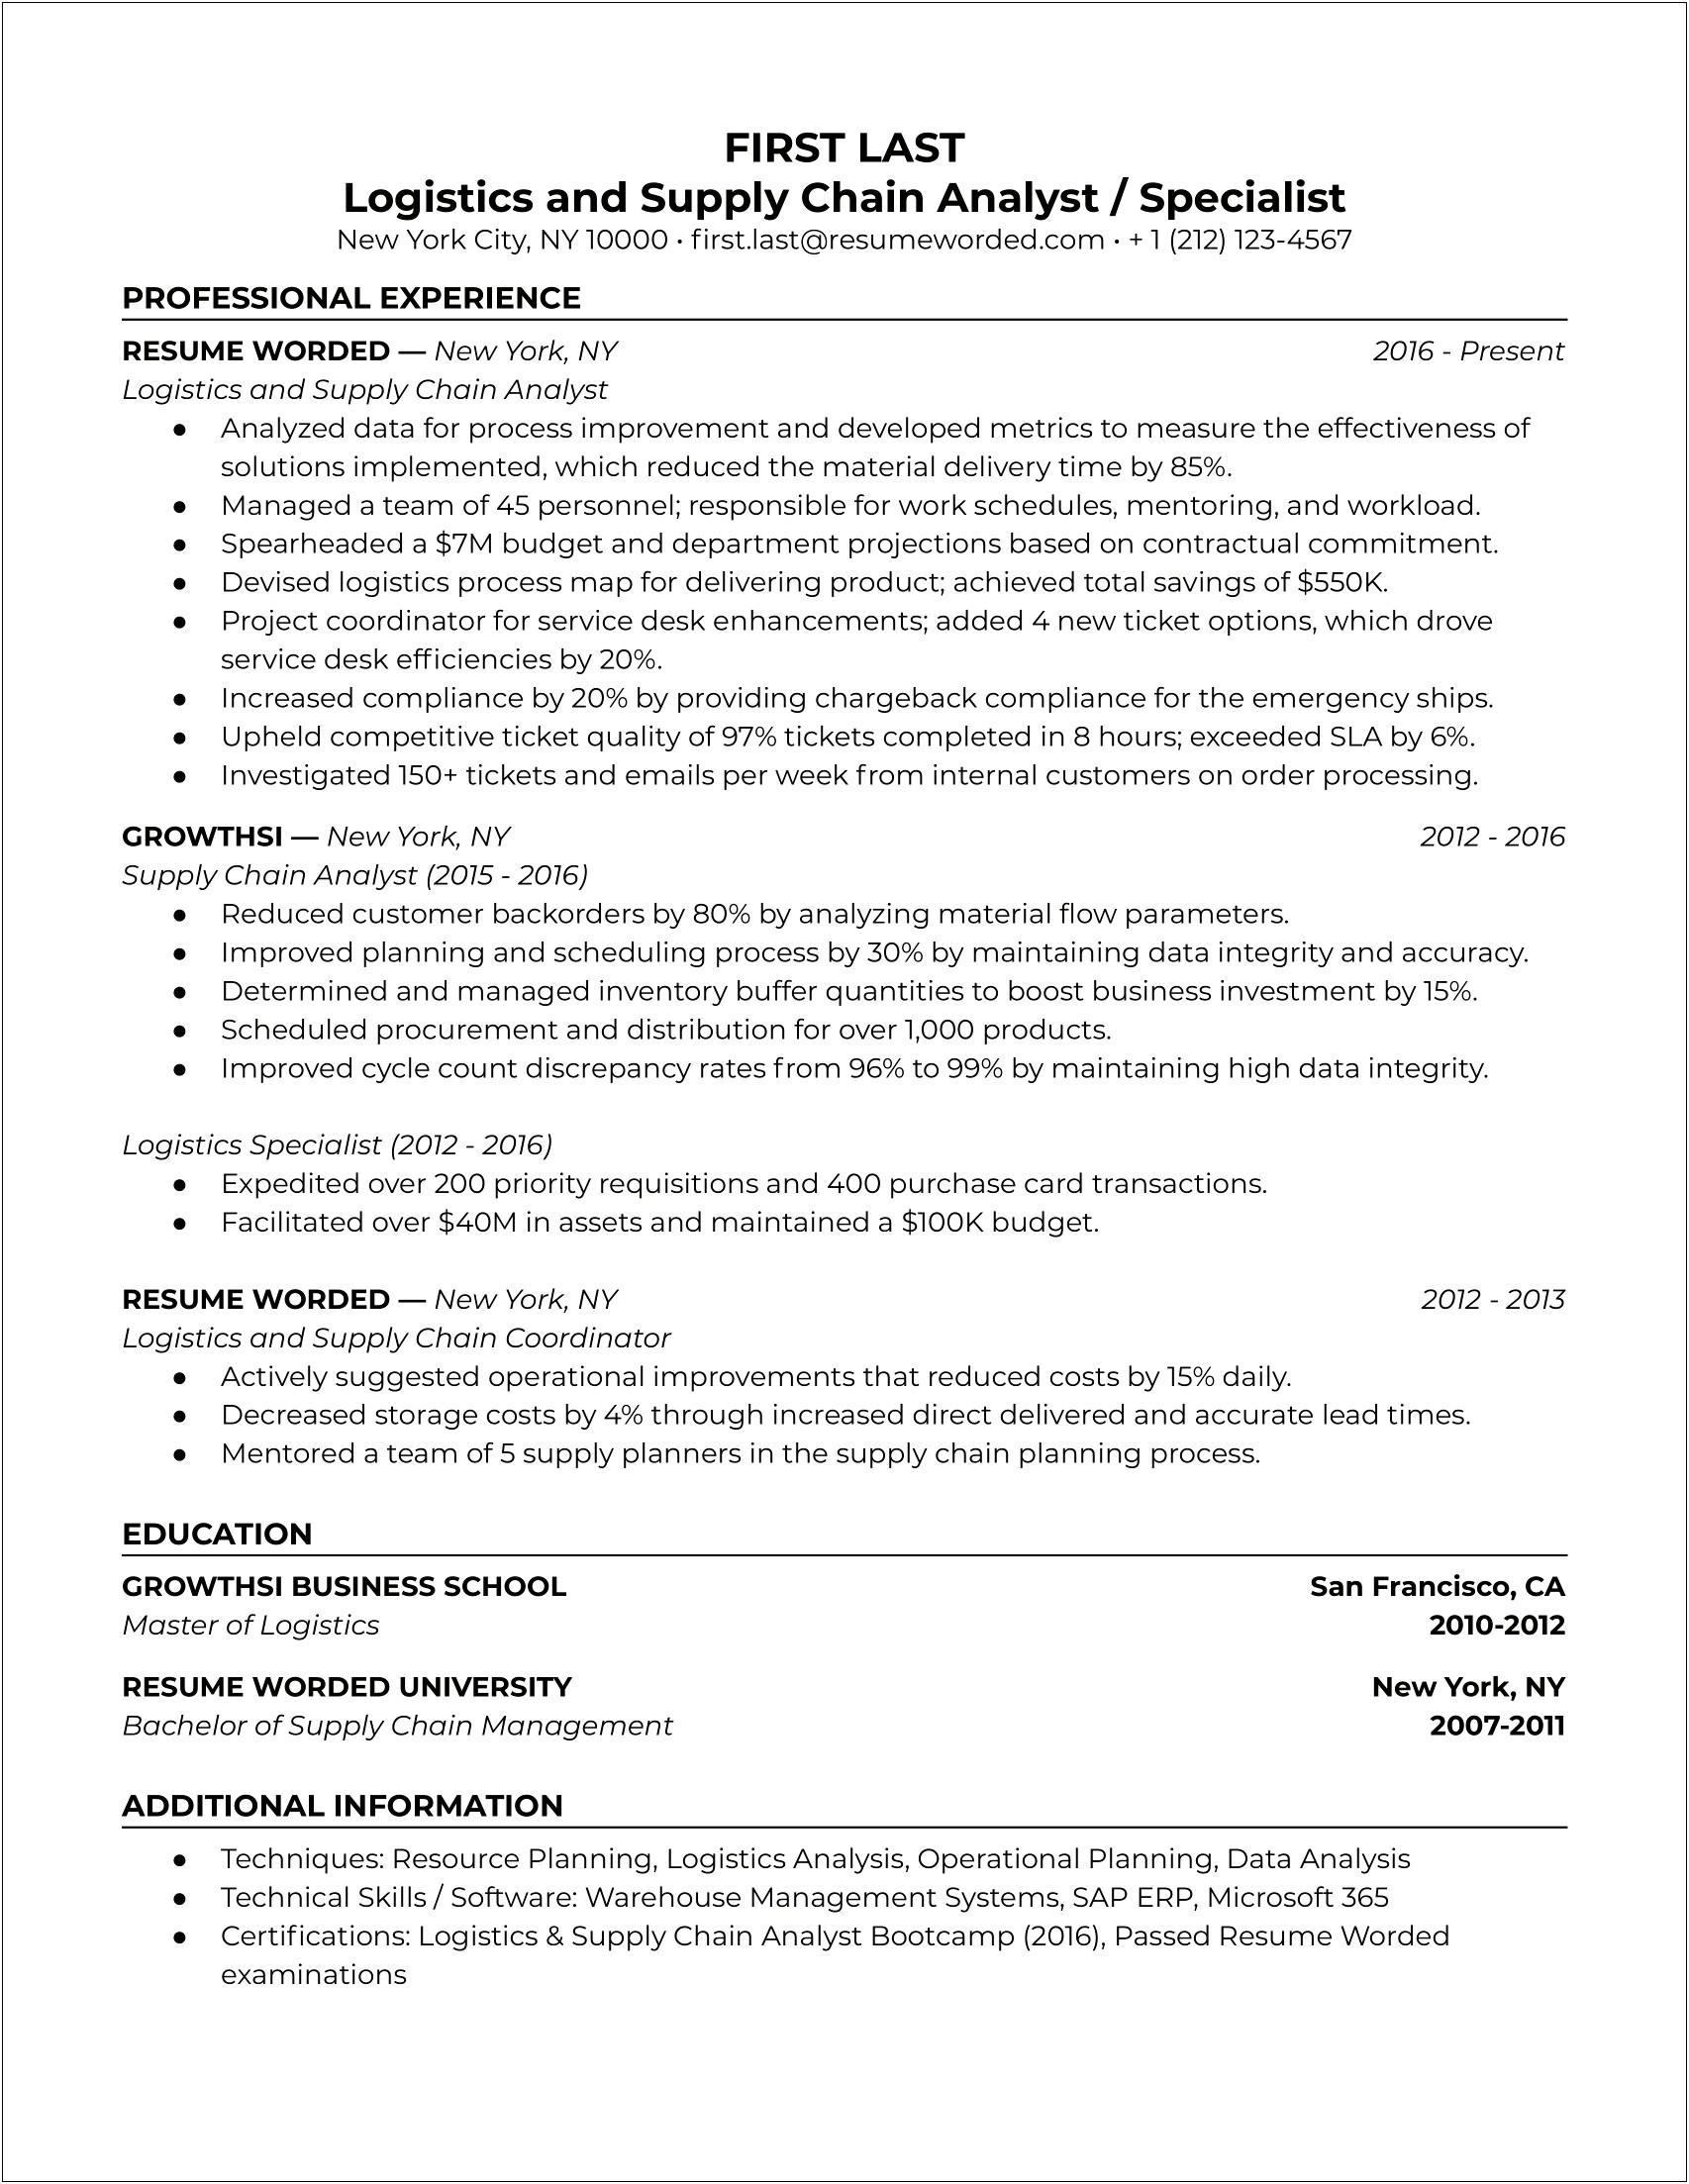 Logistic Specialist Resume Job Description